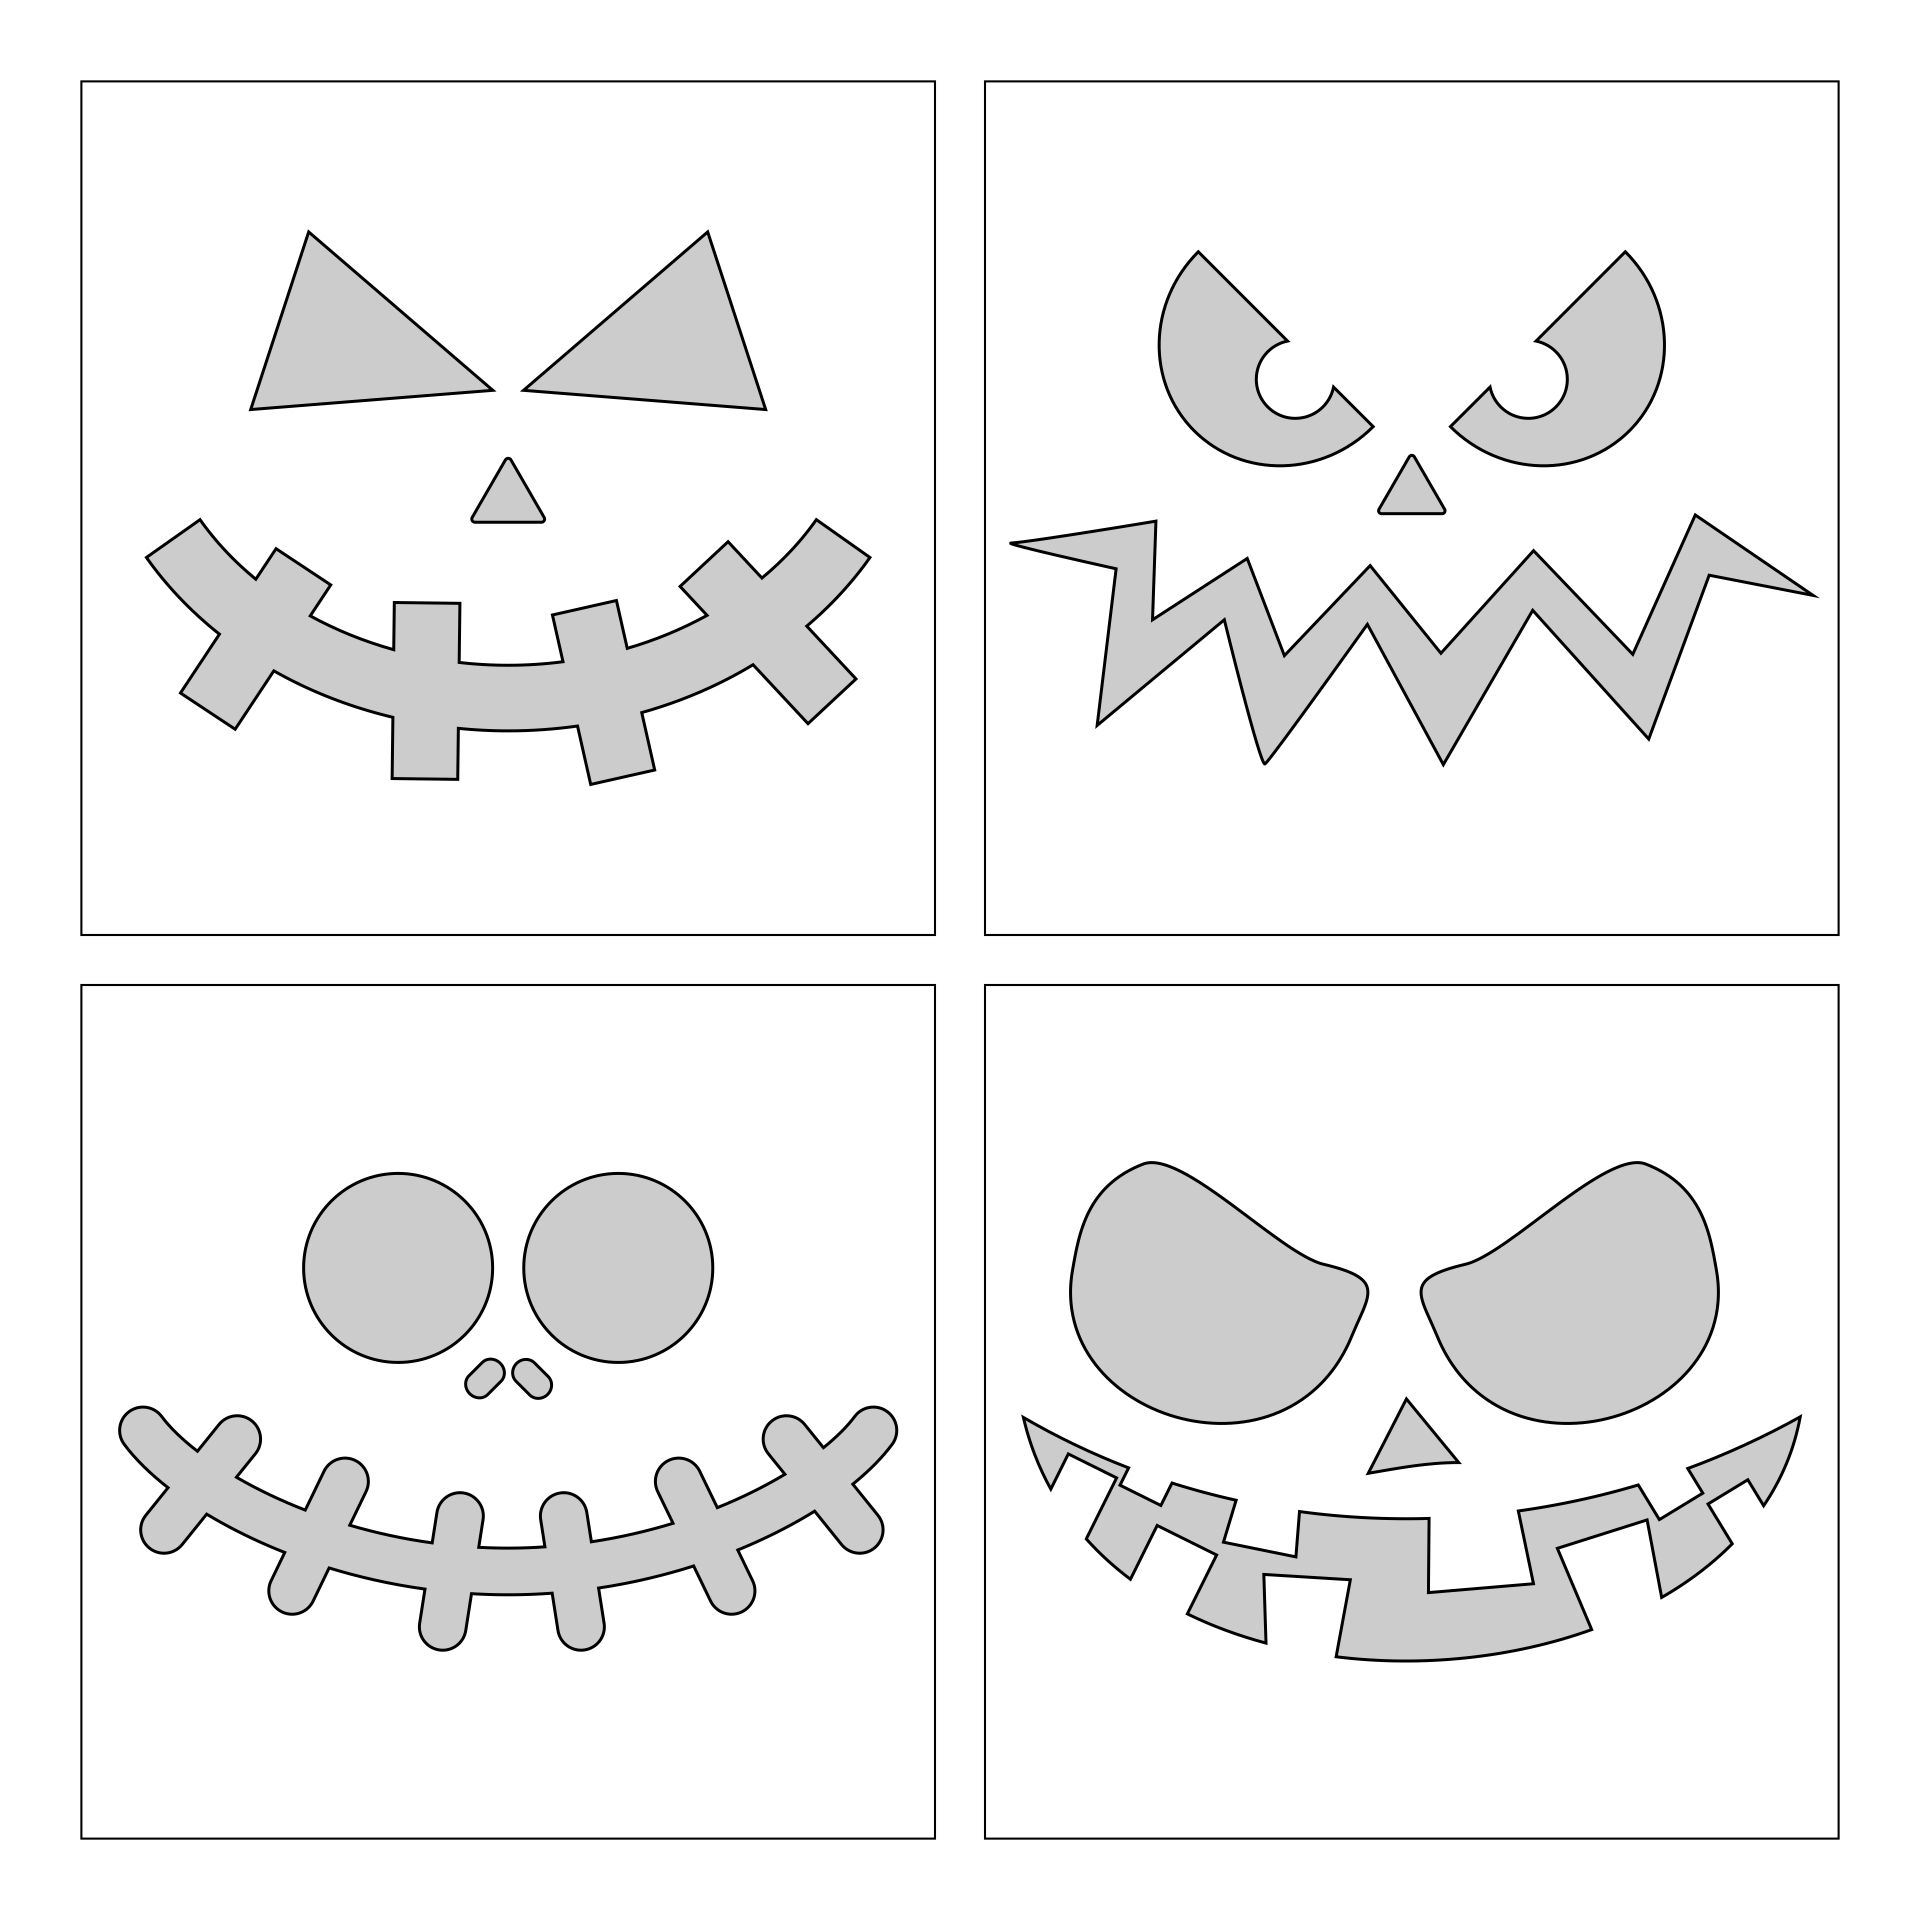 9 Best Images of Printable Halloween Pumpkin Carving Designs - Free ...